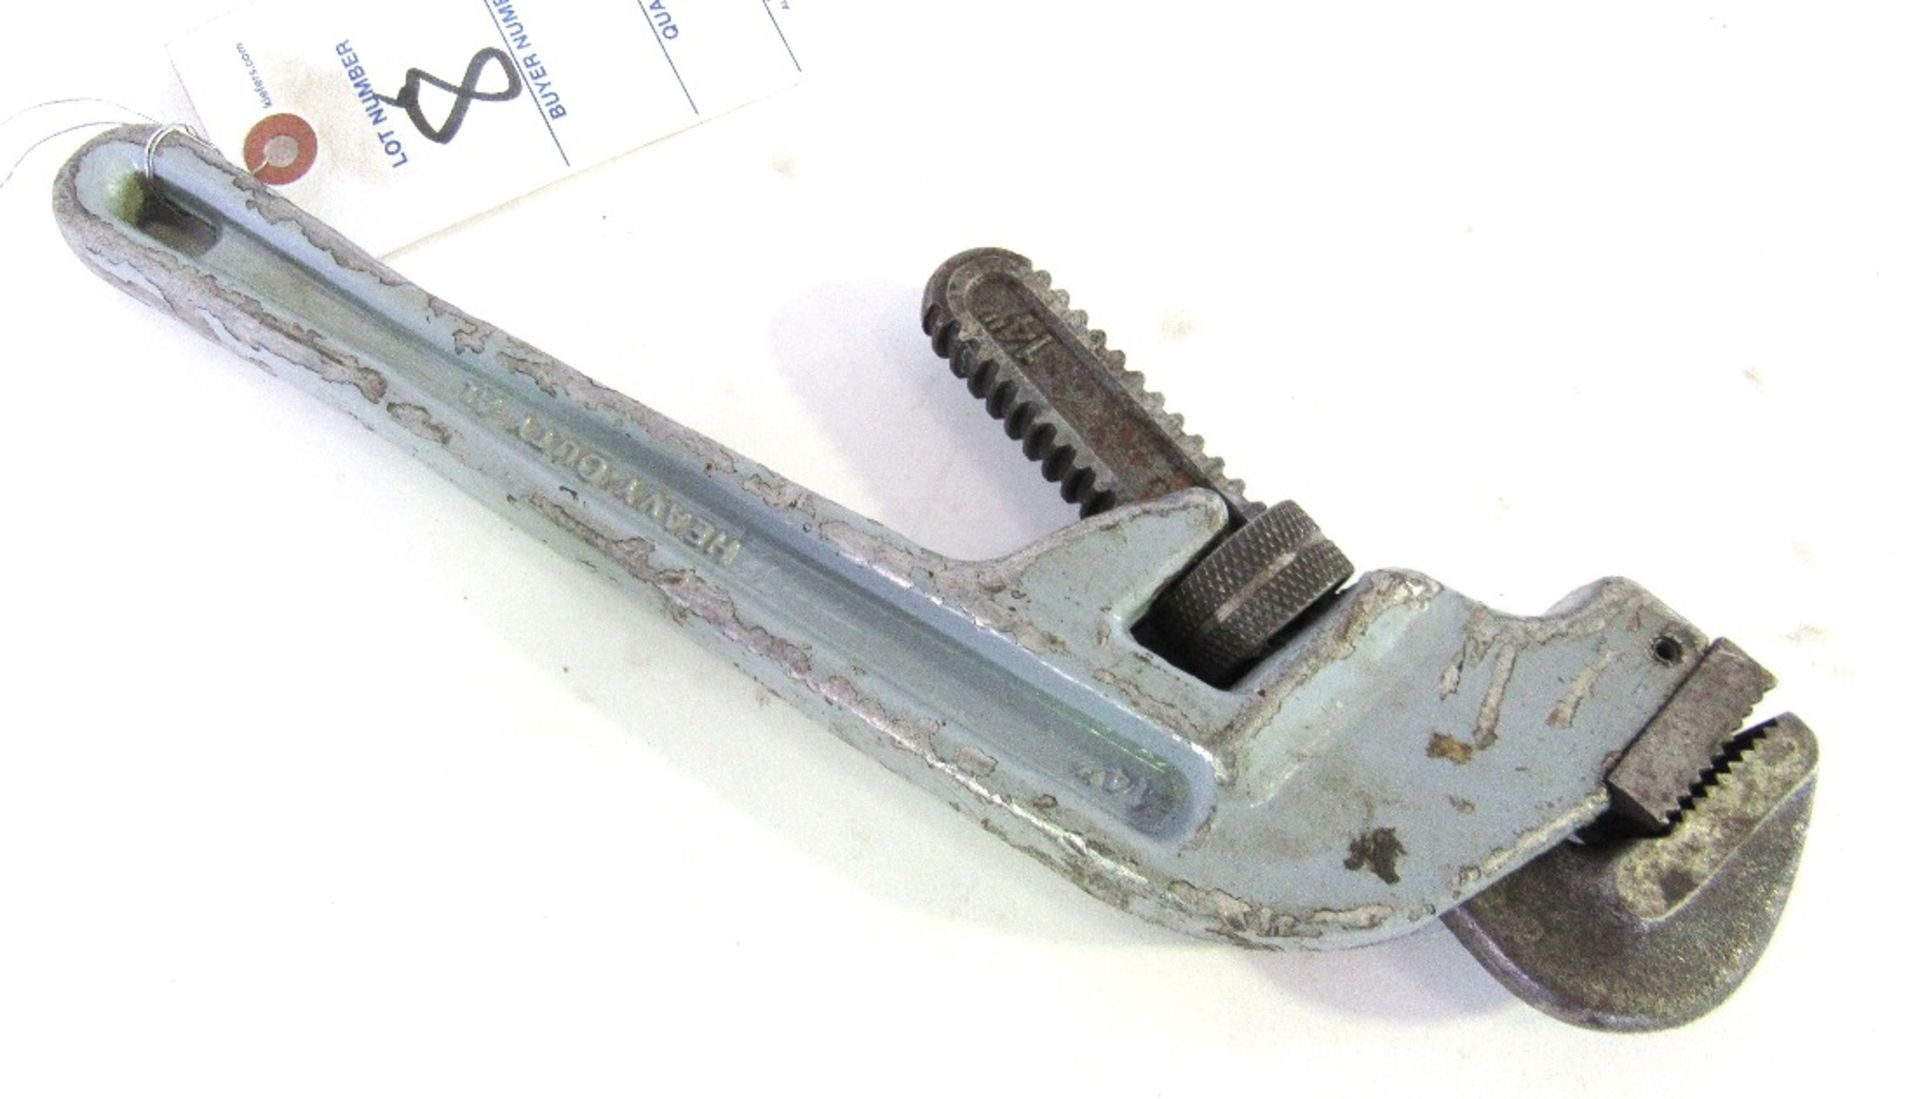 14" Aluminum Pipe Wrench